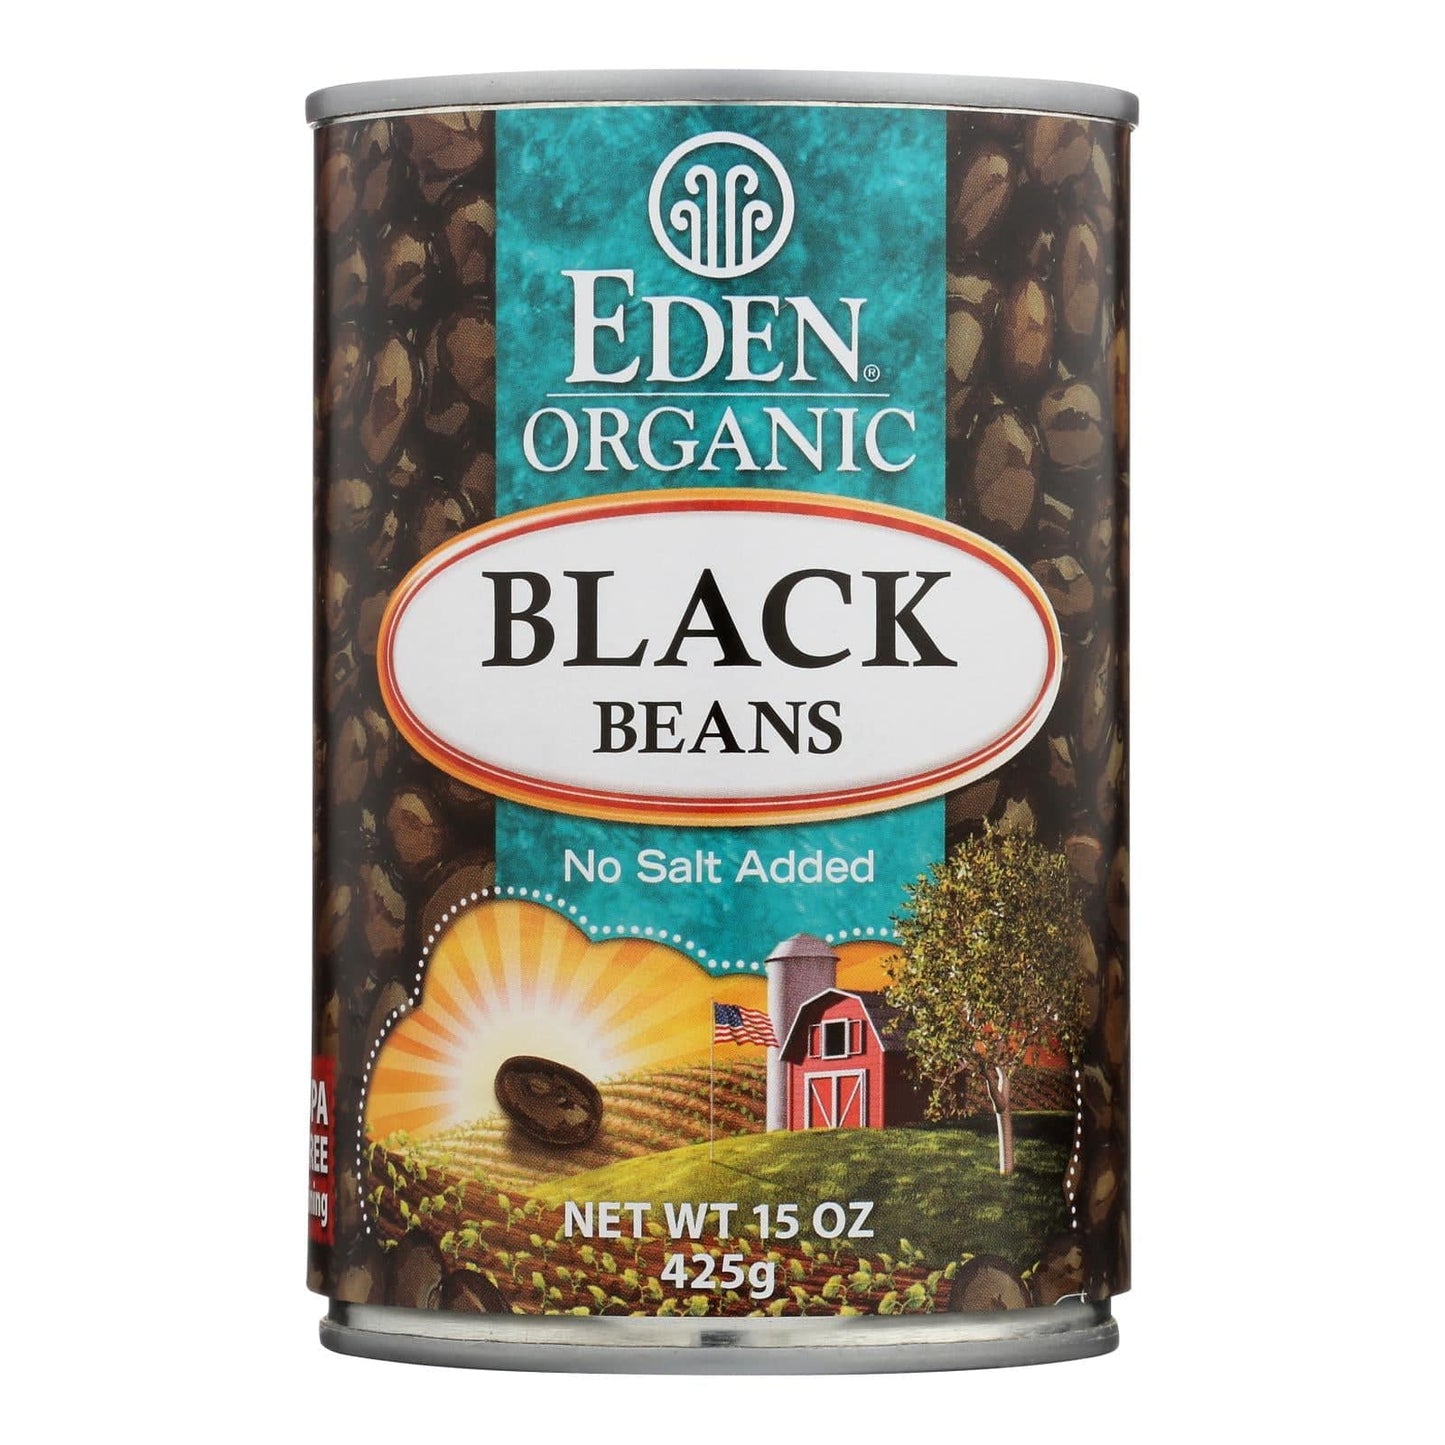 Buy Eden Foods Organic Black Beans - Case Of 12 - 15 Oz.  at OnlyNaturals.us